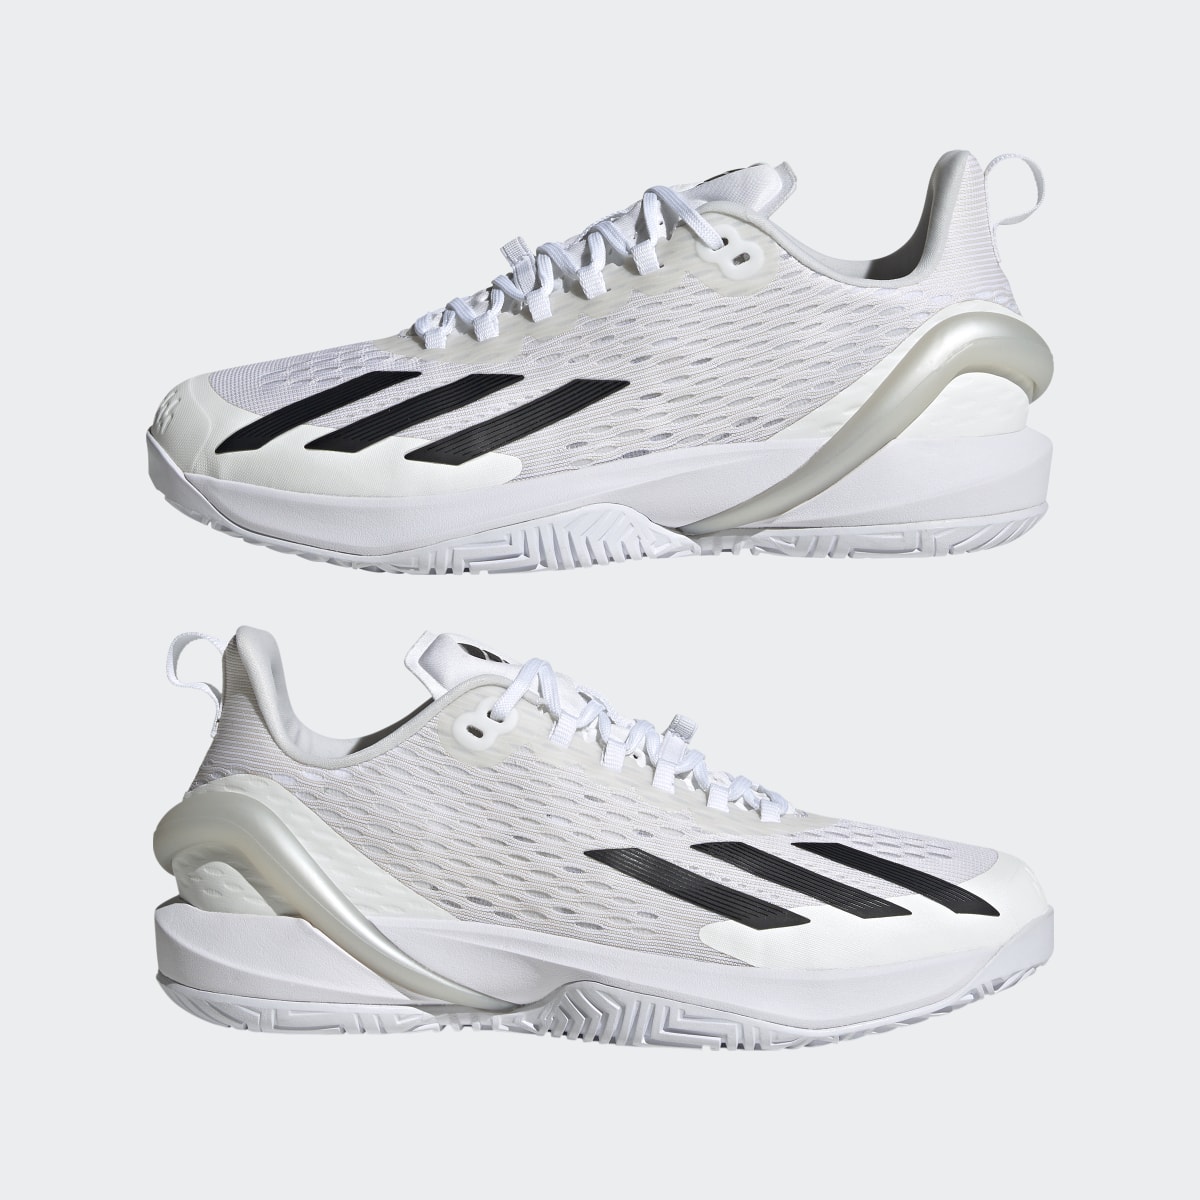 Adidas adizero Cybersonic Tenis Ayakkabısı. 11